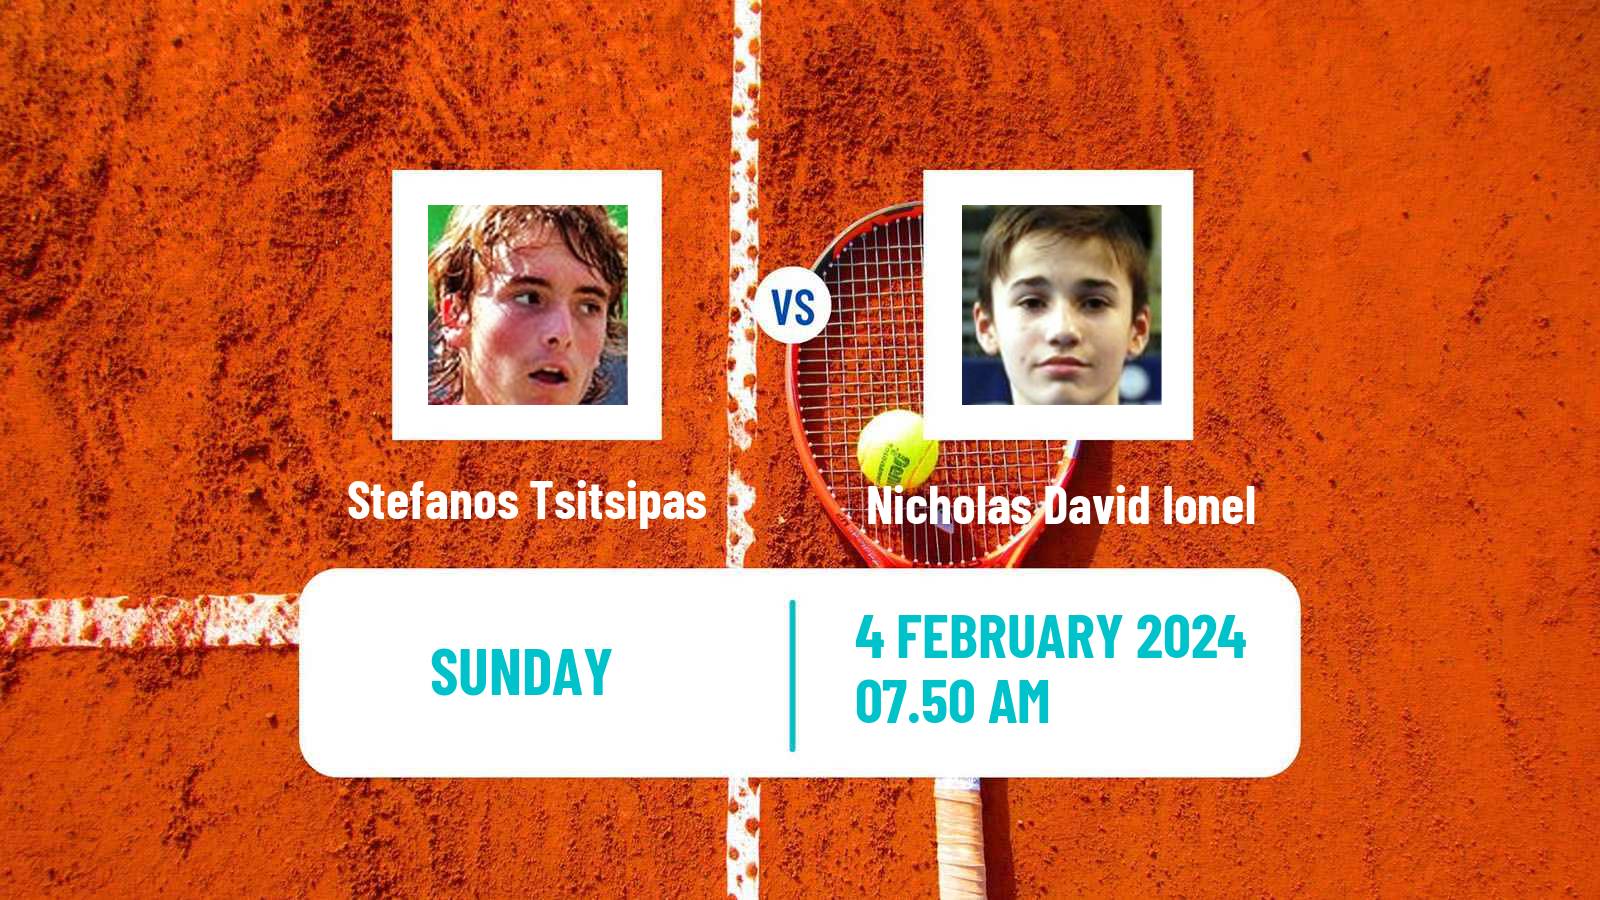 Tennis Davis Cup World Group I Stefanos Tsitsipas - Nicholas David Ionel